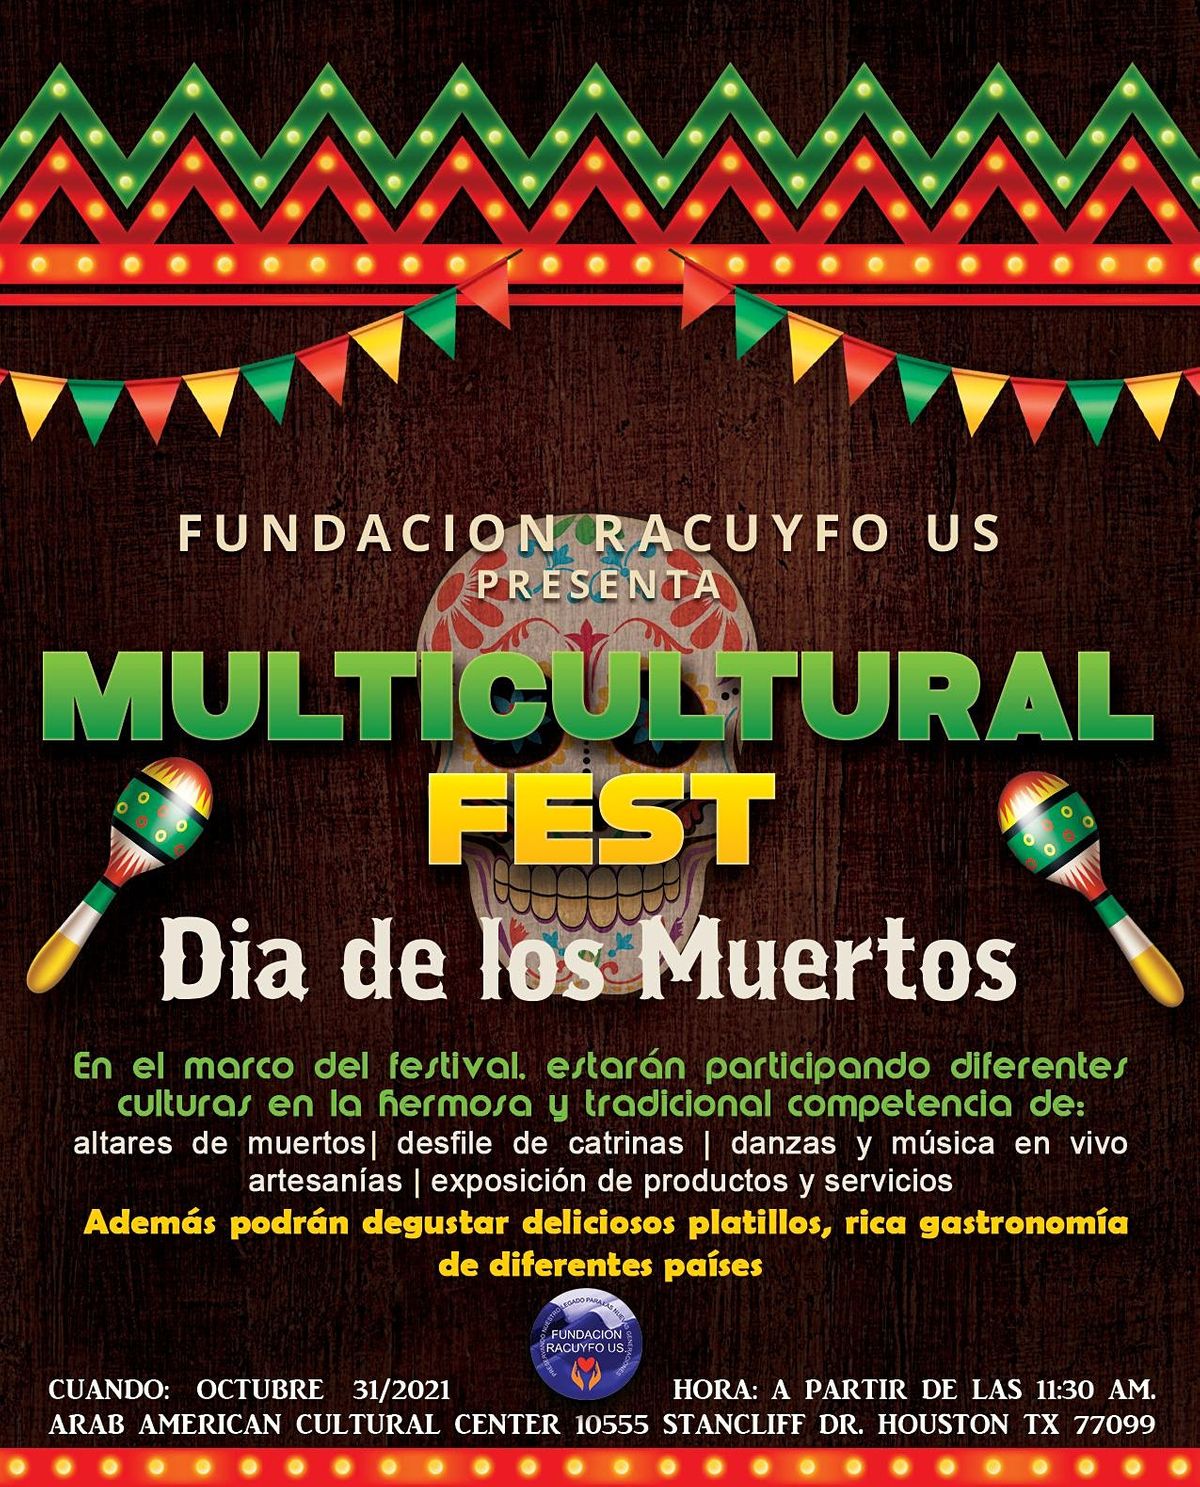 Multicultural Fest Dia de los Muertos